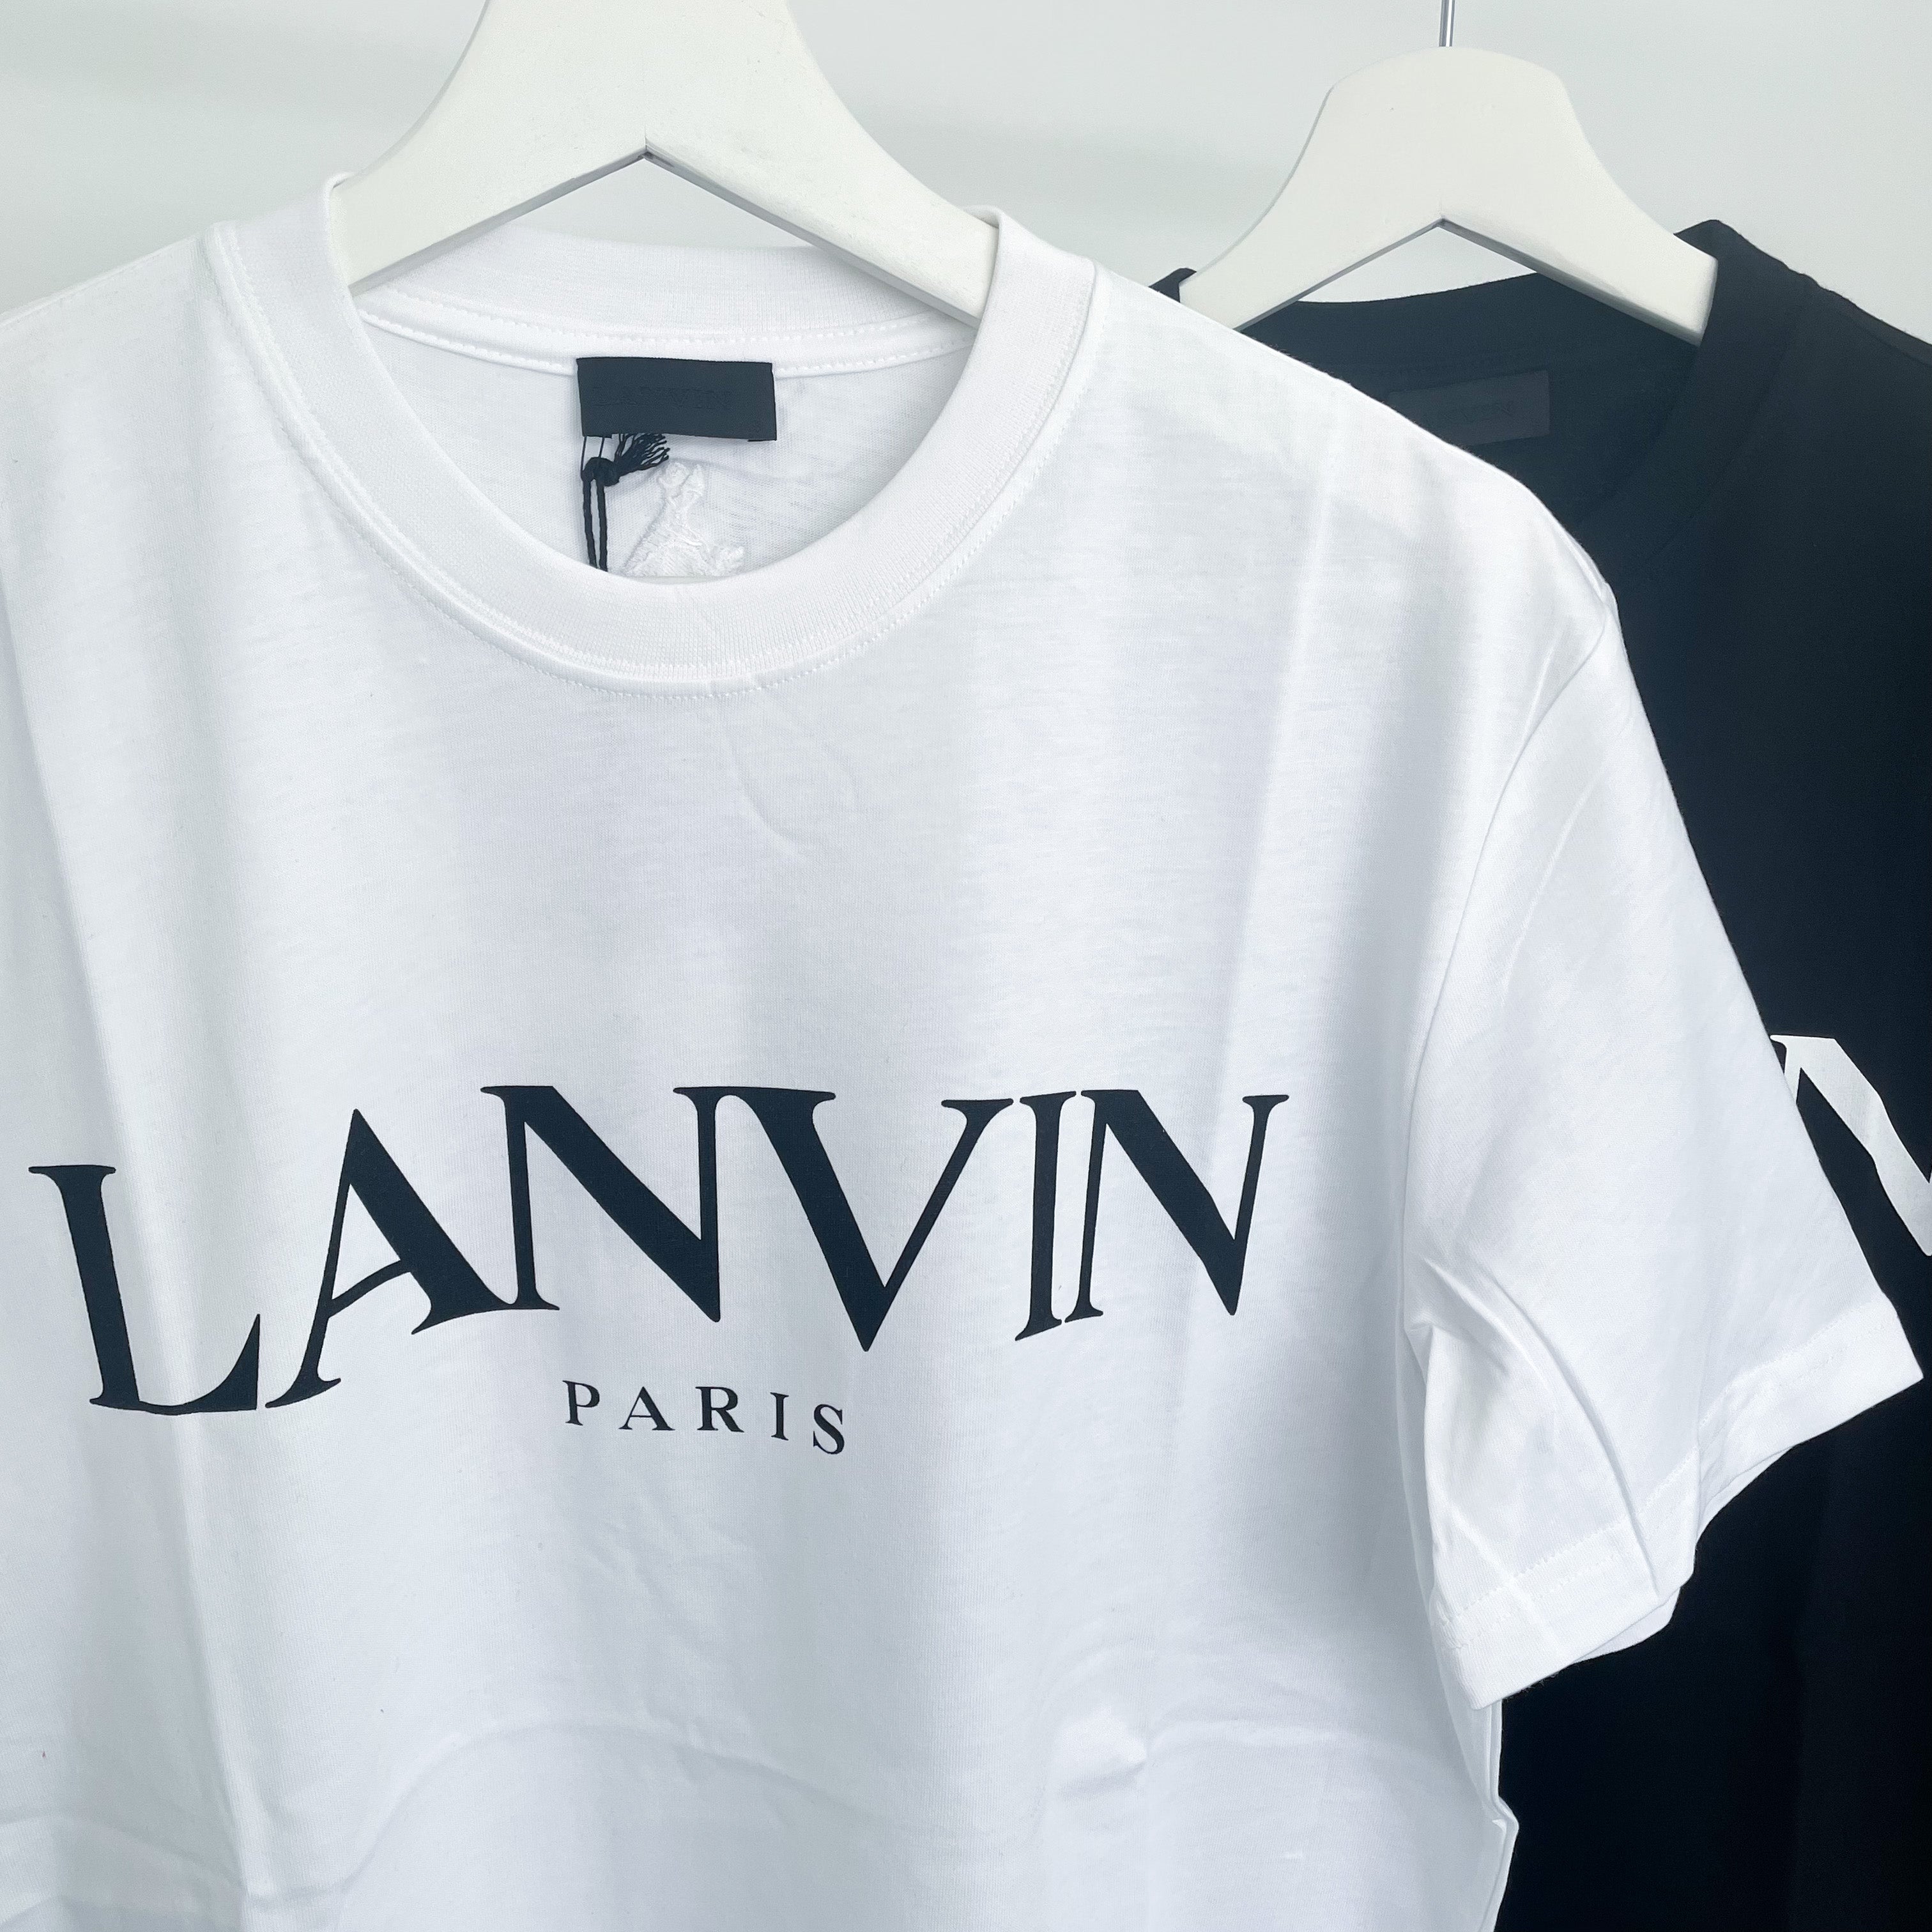 Lanvin Classic Logo Tee - White